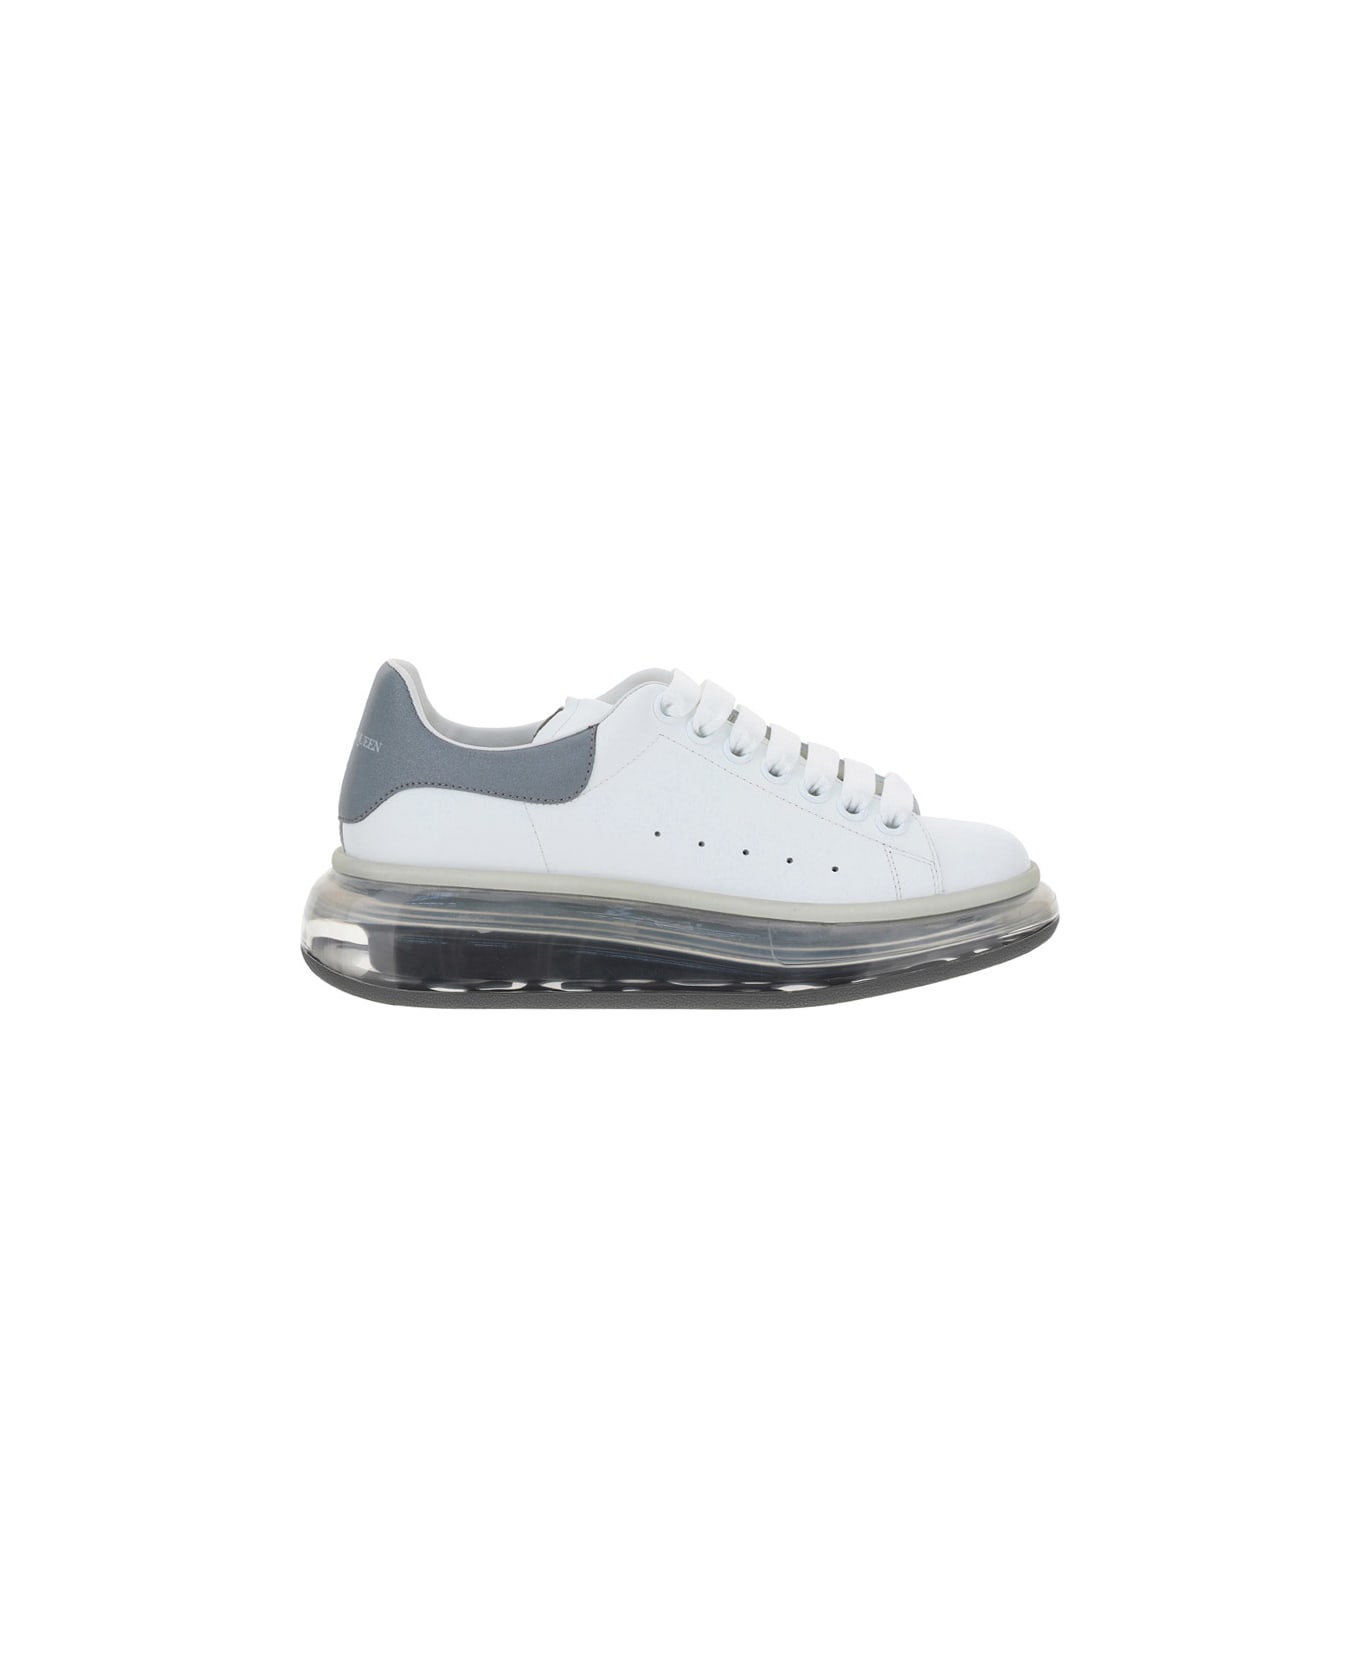 Alexander McQueen Sneakers - White/silver